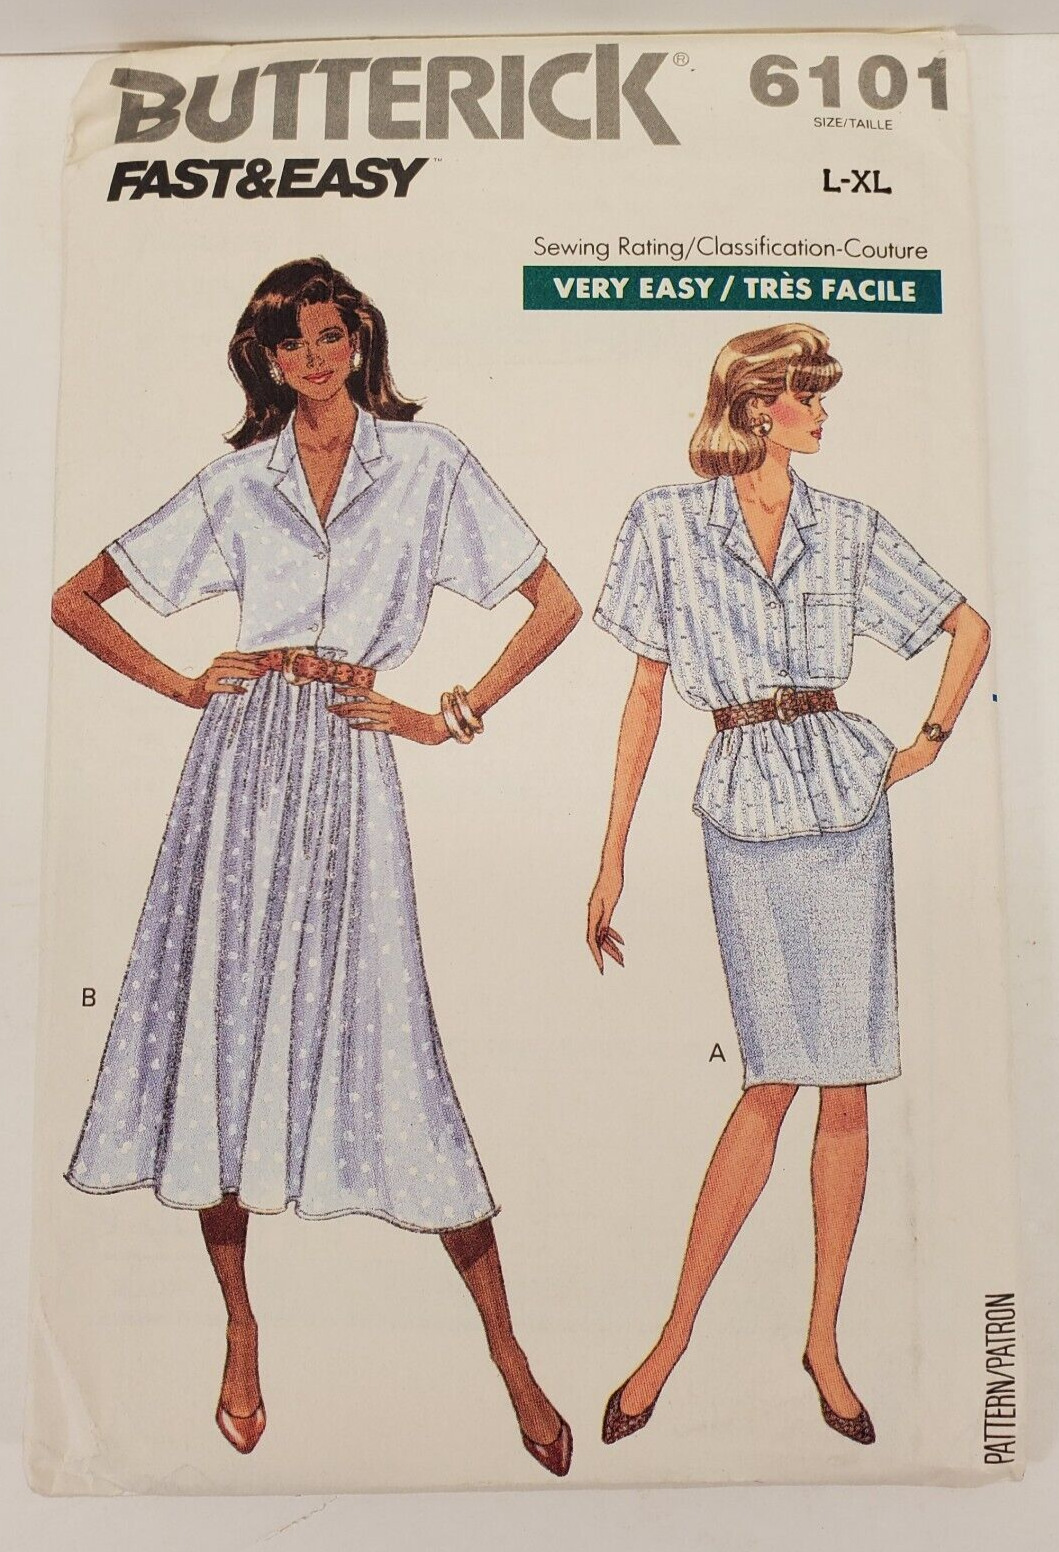 Butterick 6101 Sewing Pattern Misses Dress Top Skirt SZ L-XL 6-24 UNCUT VTG